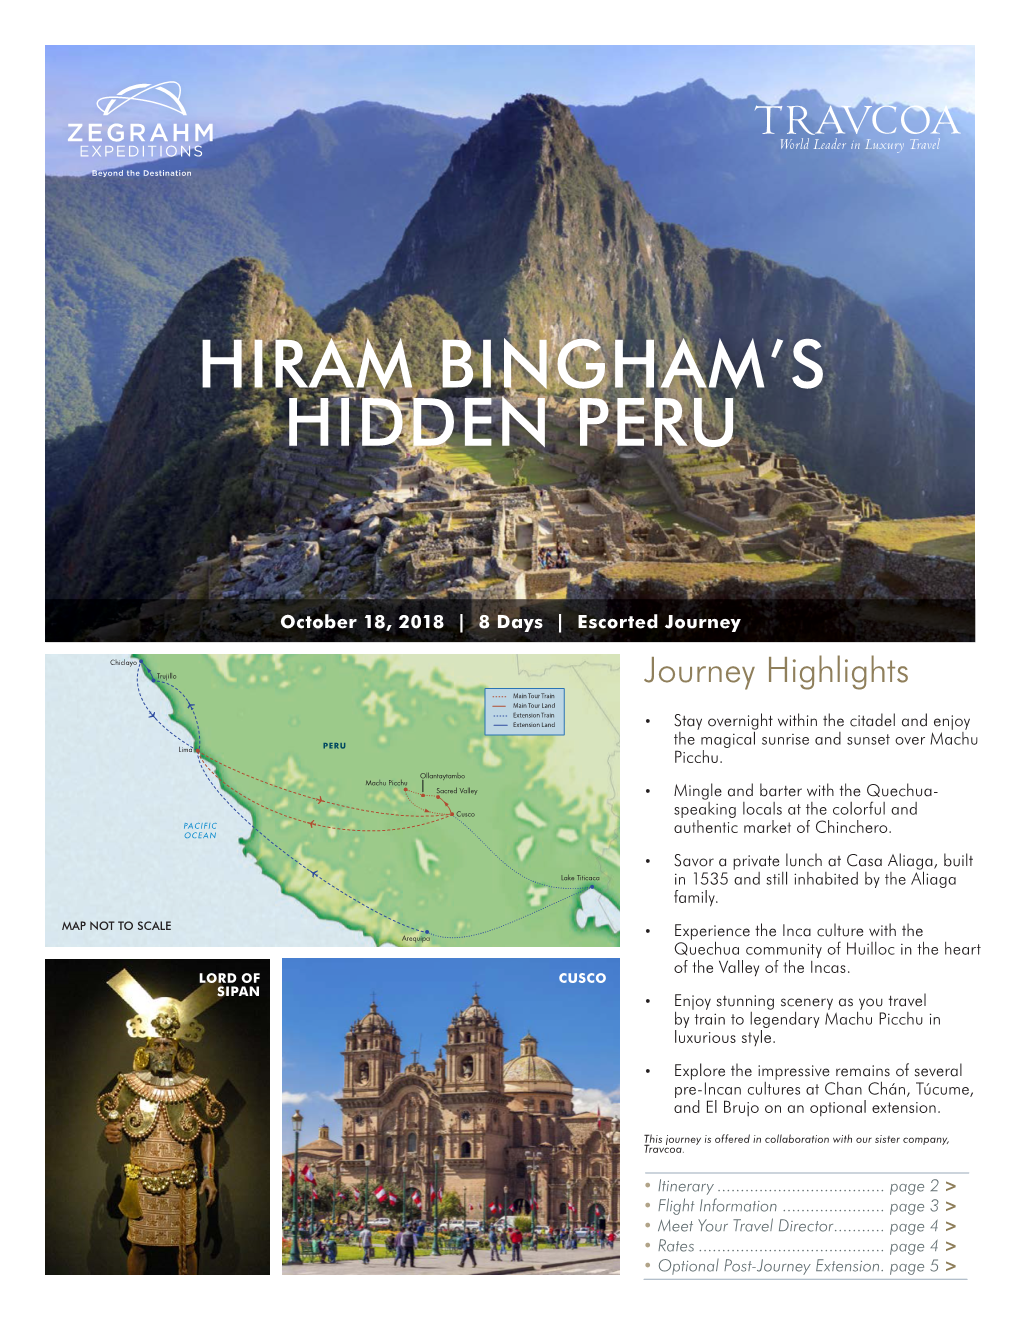 Hiram Bingham's Hidden Peru